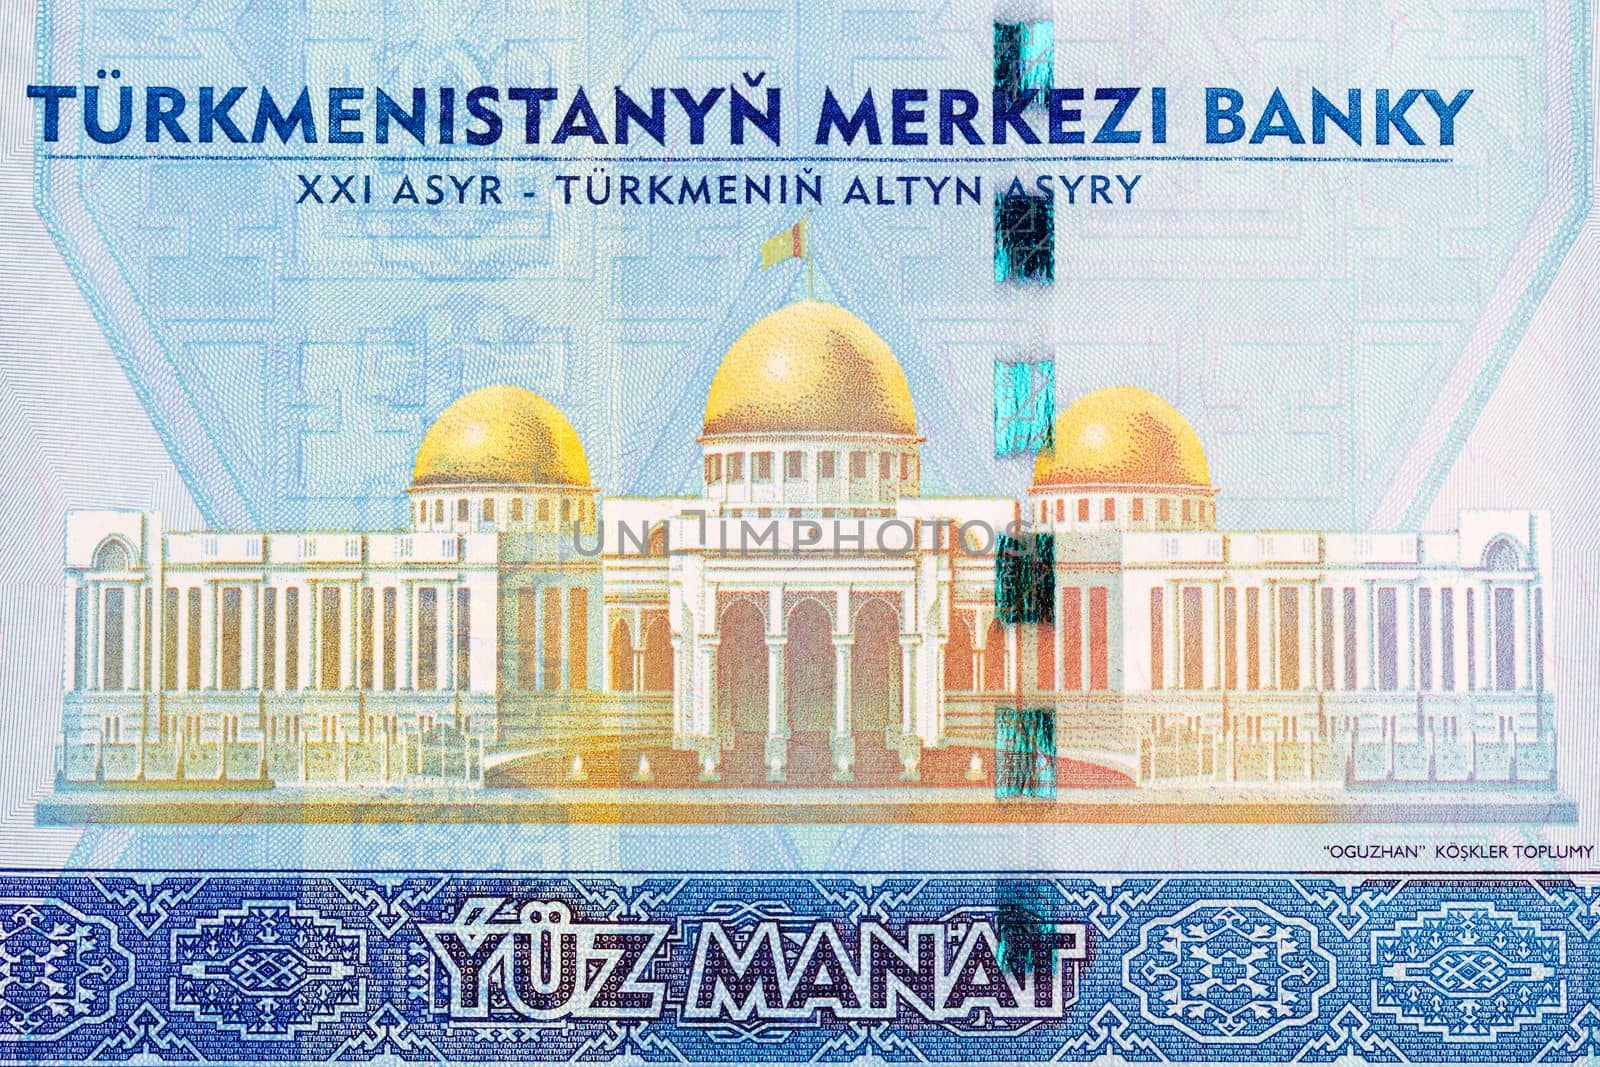 Oguzhan Presidential Palace from Turkmenistani money - Manat